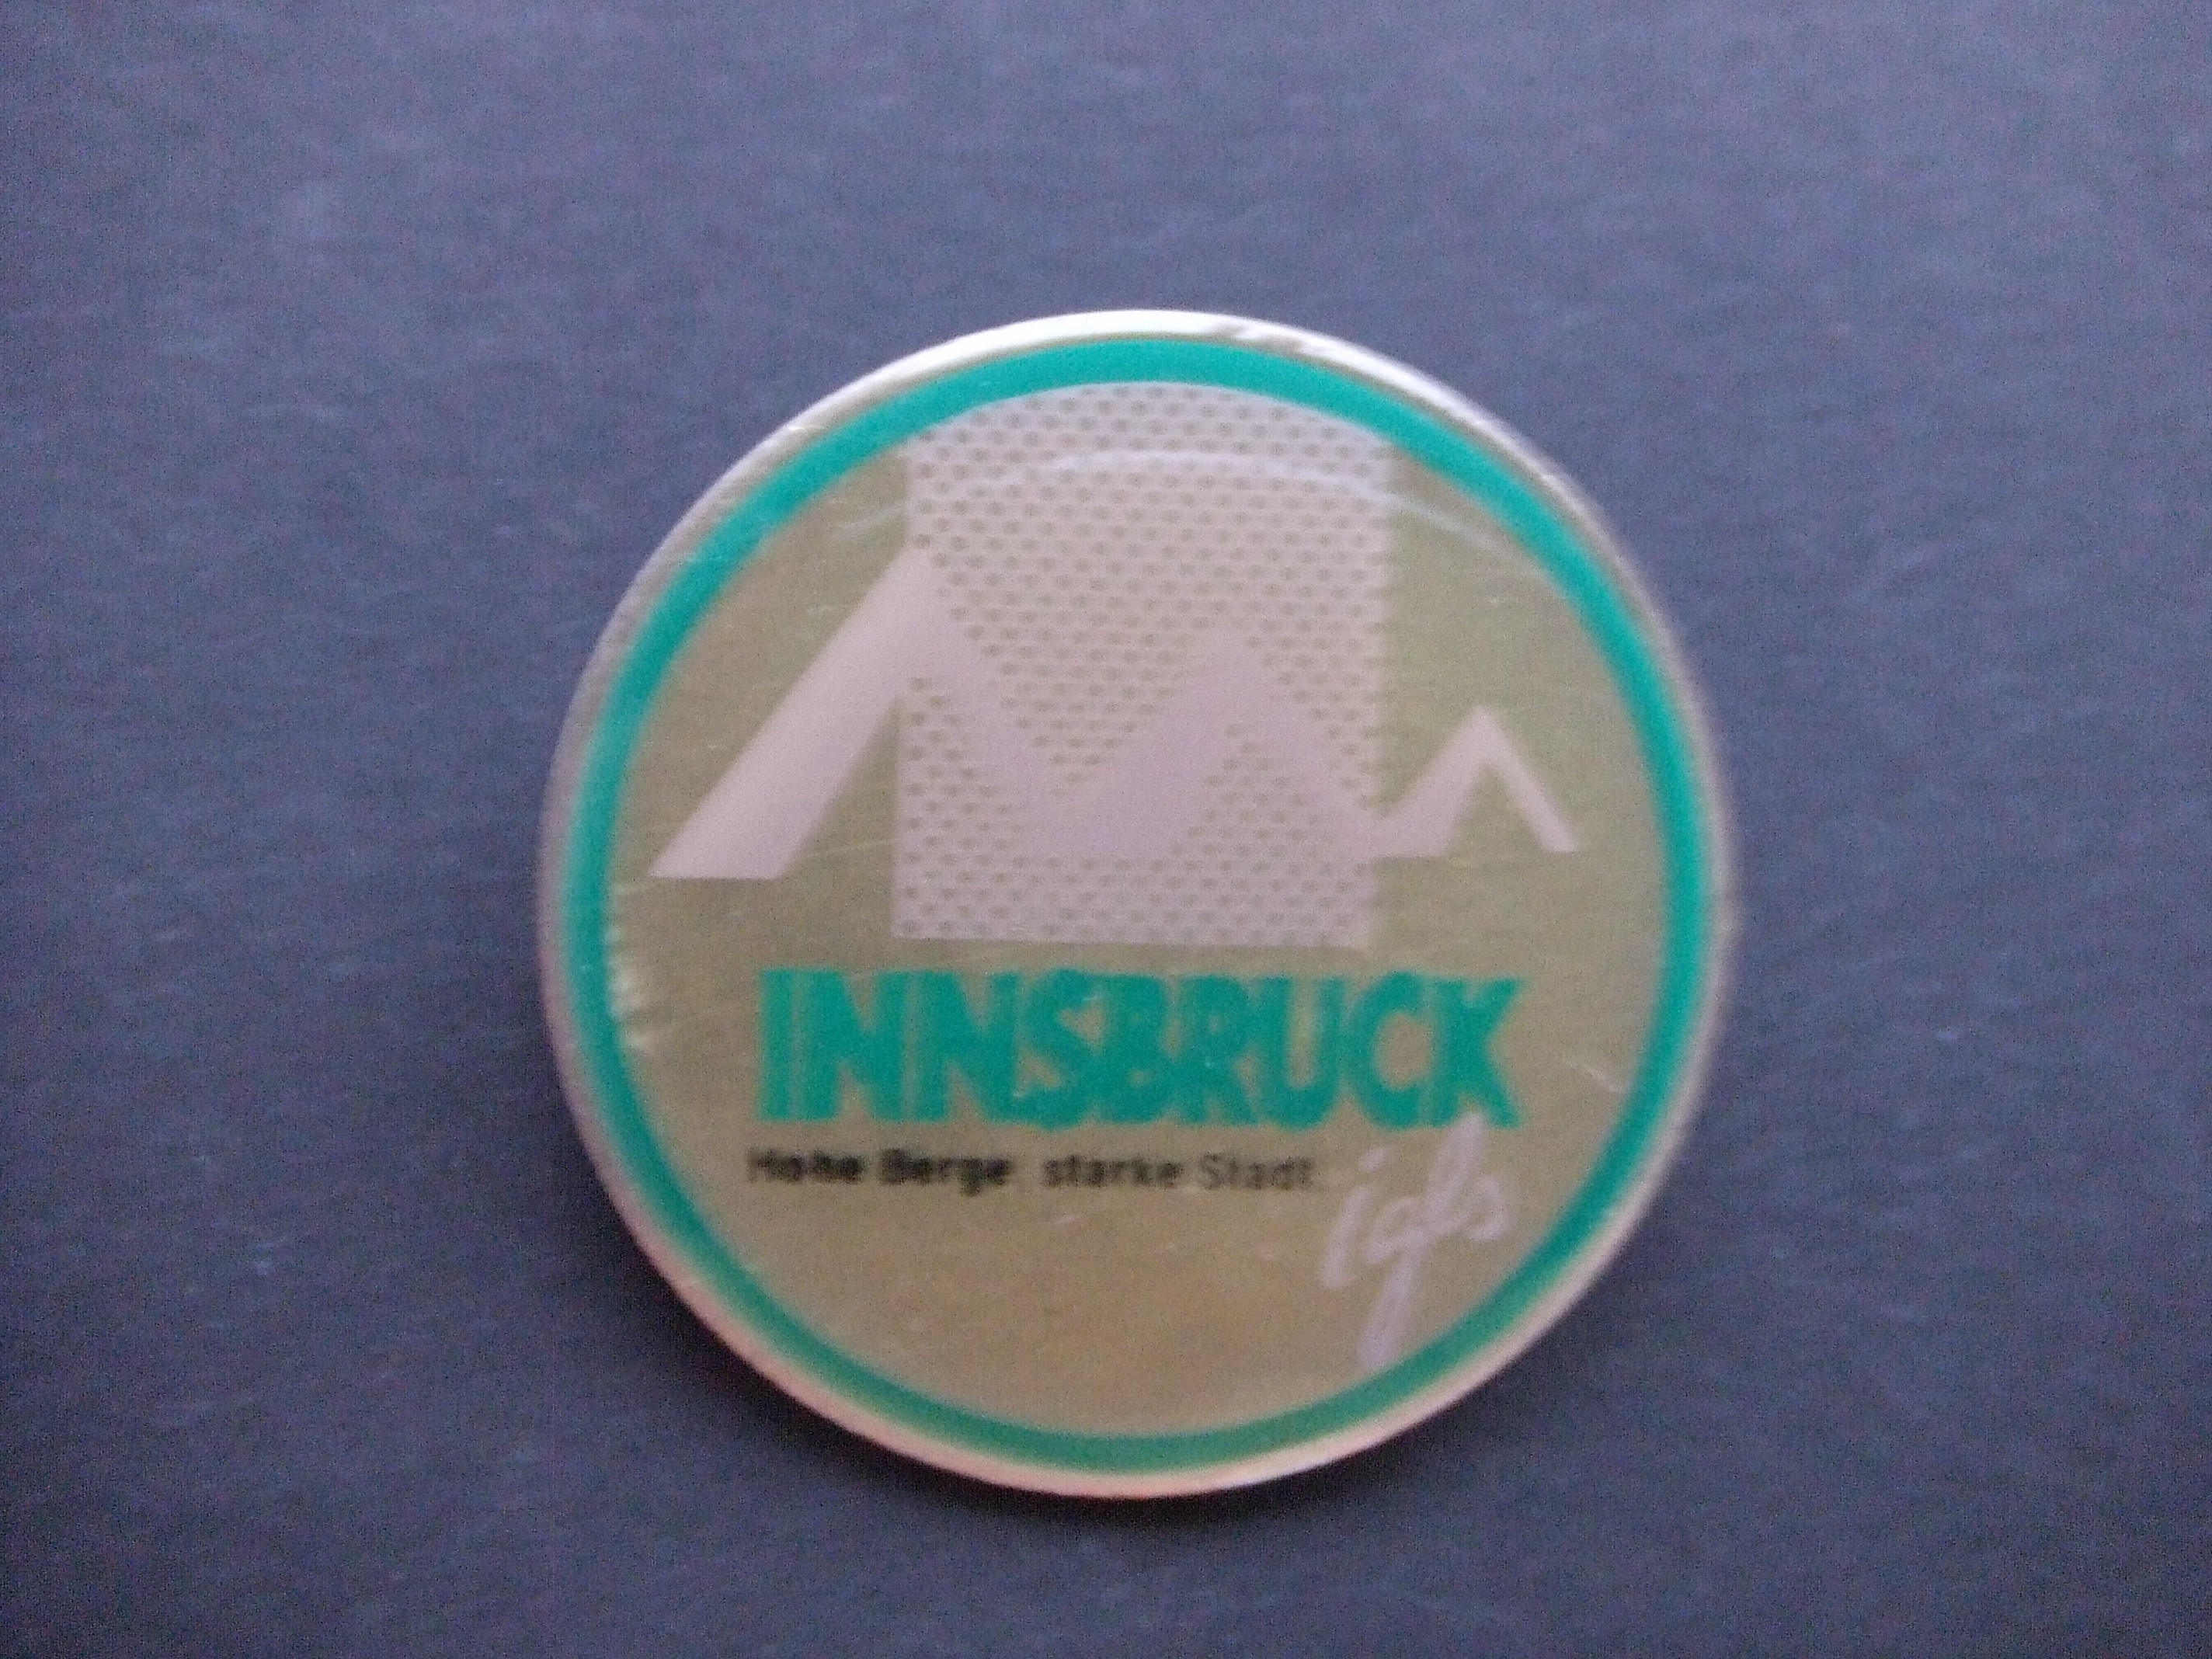 Innsbruck habe berge starke stadt